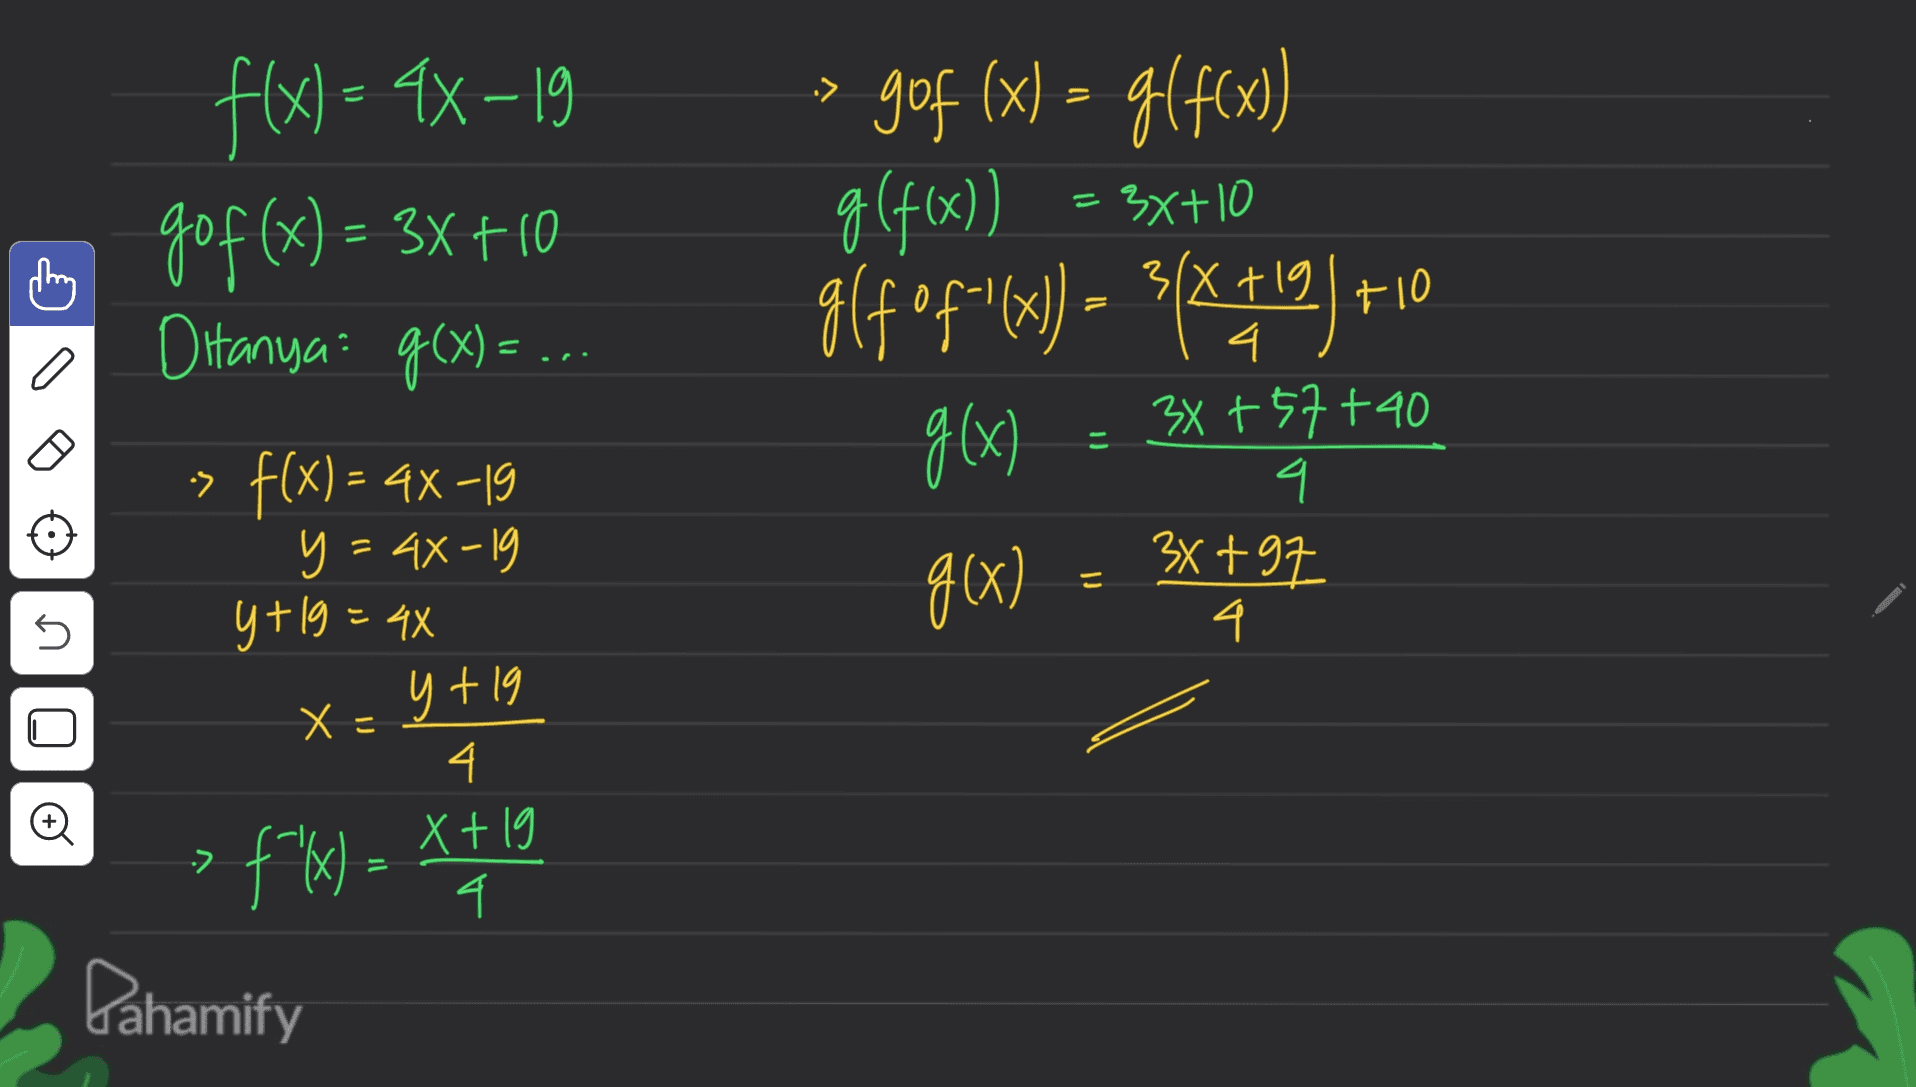 -> f(x) = 4x–19 gºf(x) = 3x +10 go = X - = Ditanya: g(x)= ... gof (x) = g(f(x)) g (f(x)) glf ºf="x) = ?($#19)+10 ( g(x) g(x) 3x+10 3(+ 4. 3x +57+40 4 34+97 4 Б -> f(x) = 4x -19 y = 44-19 y+19=4x U y tig ם X = 4. X + > fx) = x+19 4 ? Pahamify 